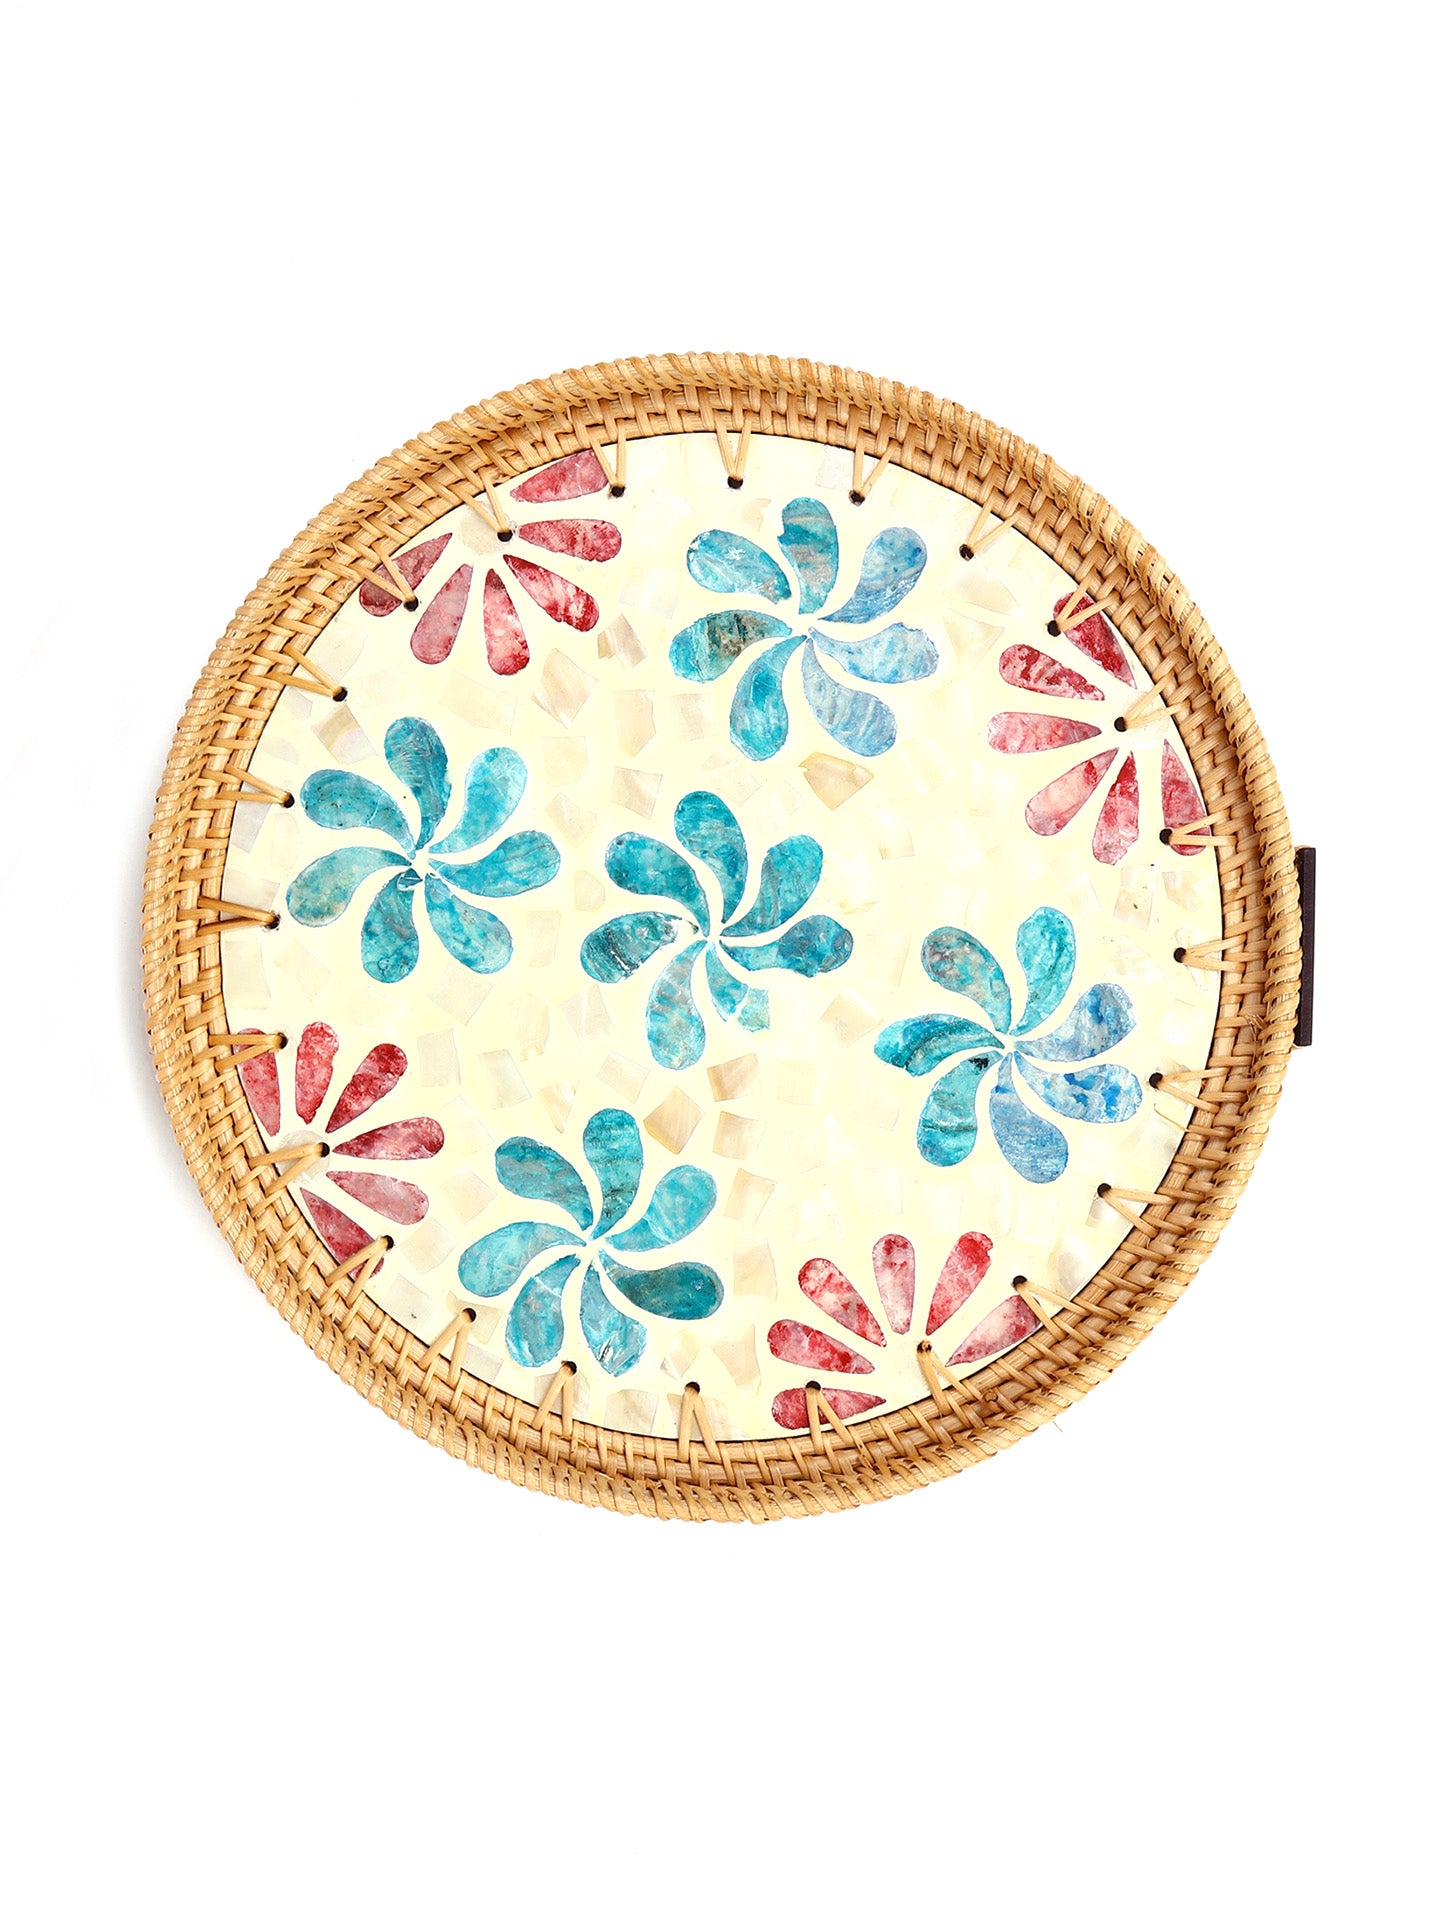 Buy Online Cane Tray Round - Flower Mosaic